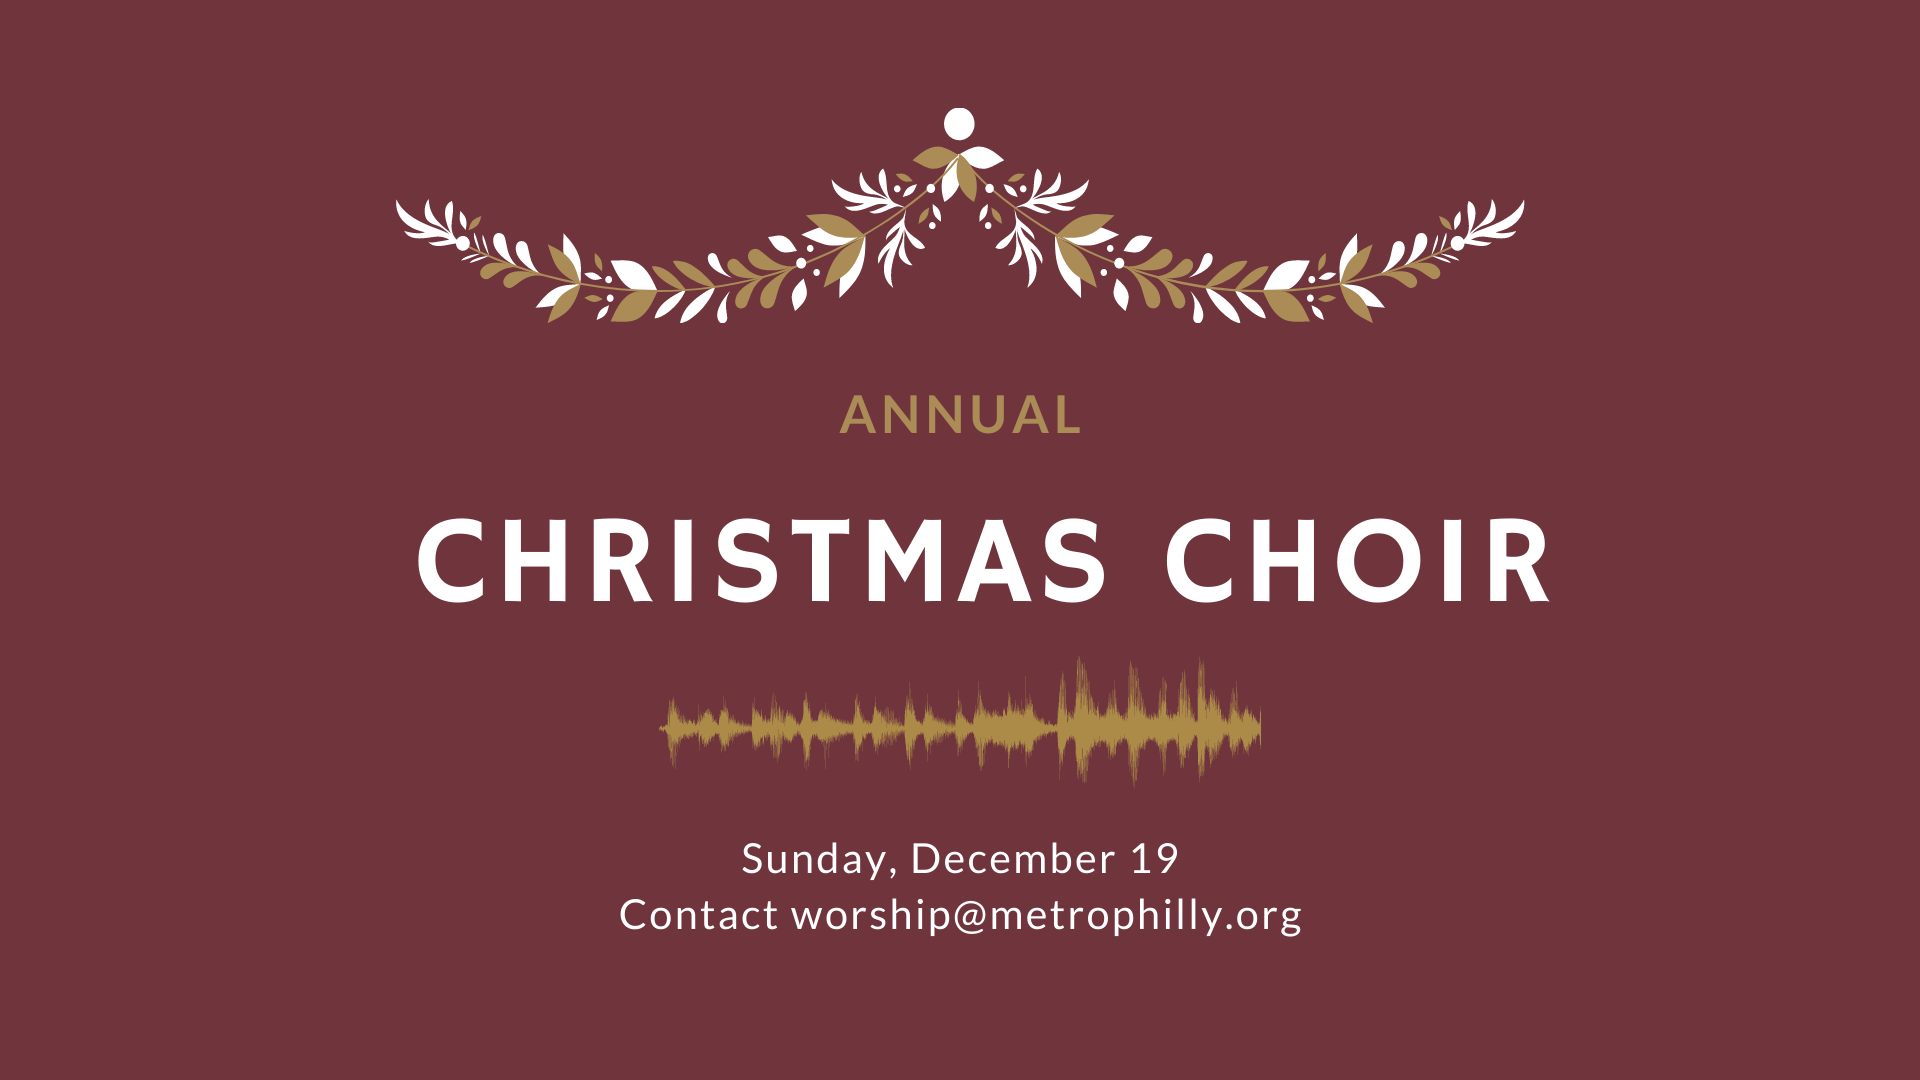 Metro's Annual Christmas Choir